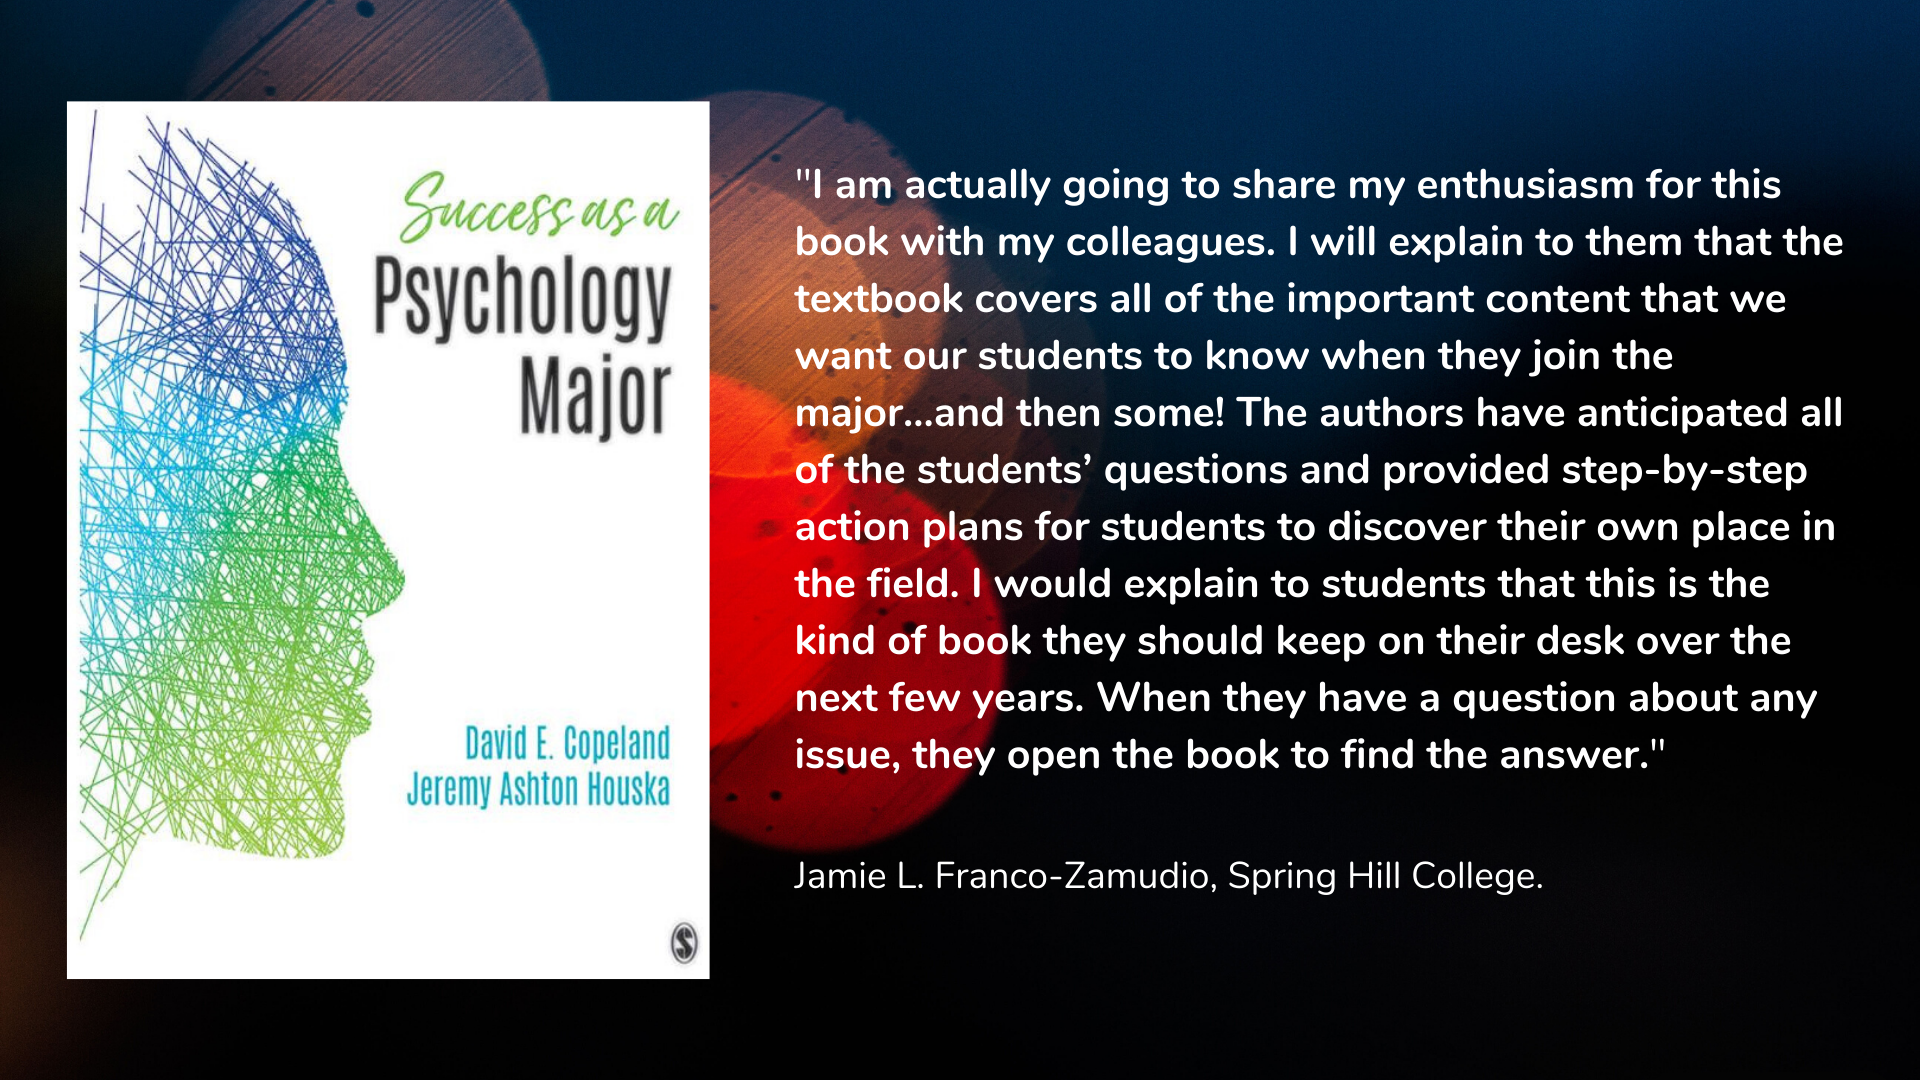 Success as a Psychology Major by David E. Copeland & Jeremy Ashton Houska